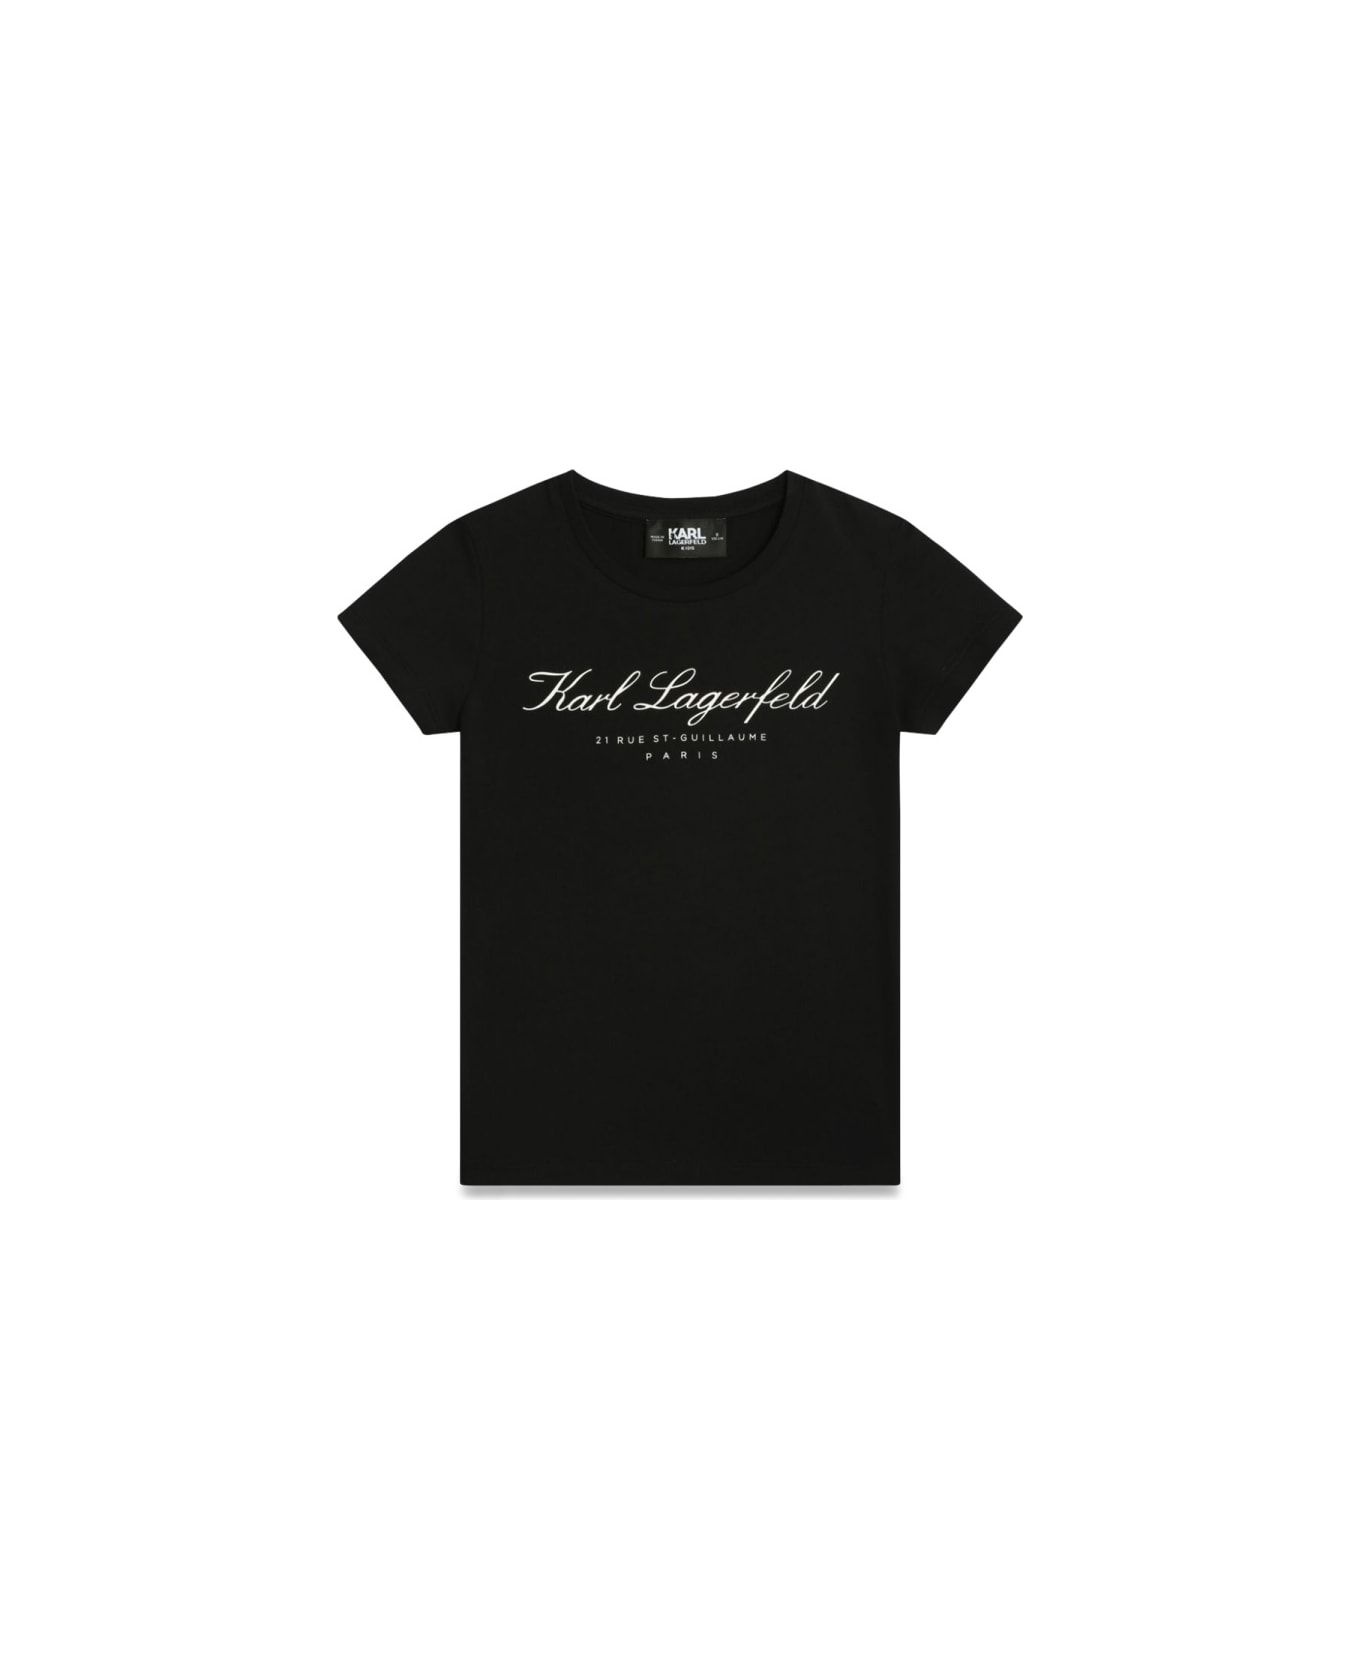 Karl Lagerfeld Tee Shirt - BLACK